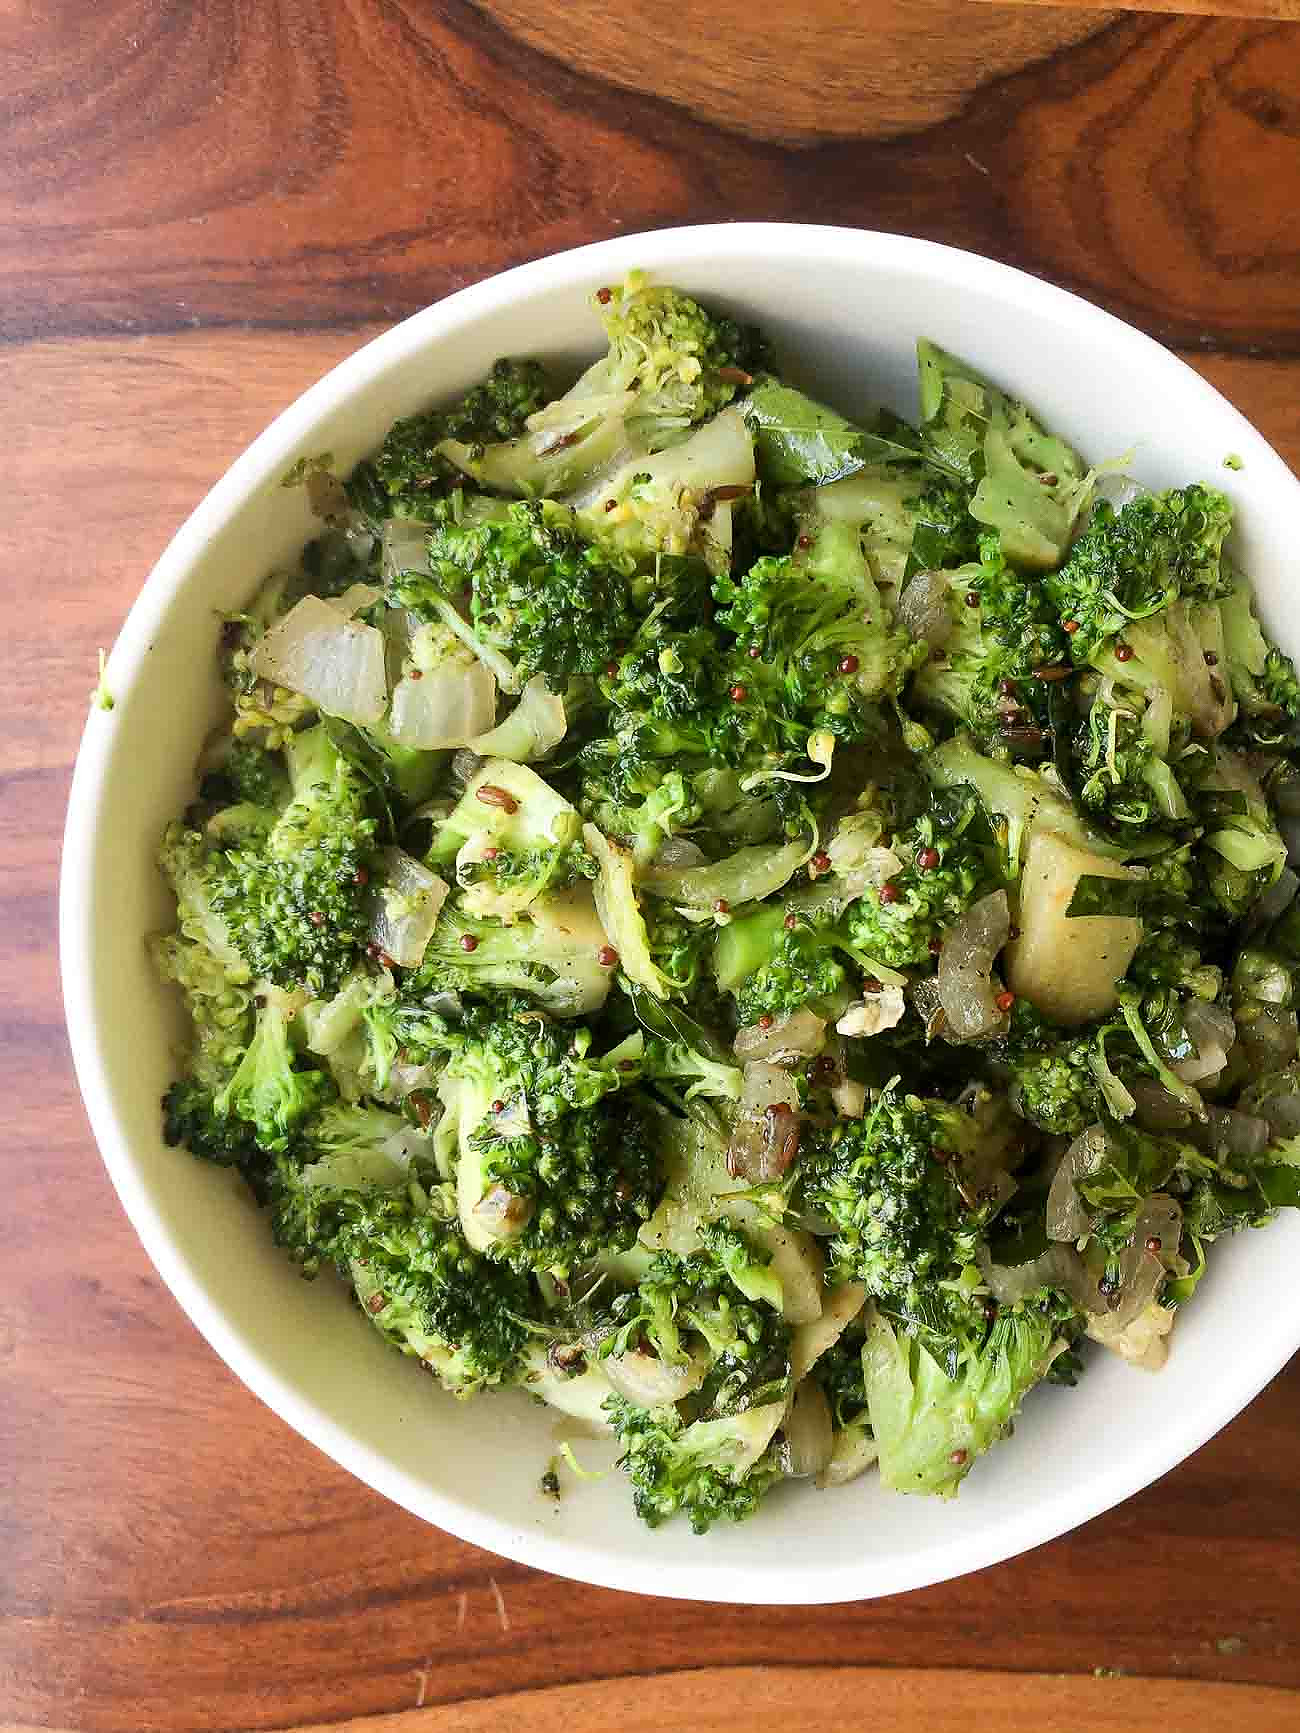 Tamil Nadu Style Broccoli Poriyal Recipe - Broccoli Stir Fry Recipe